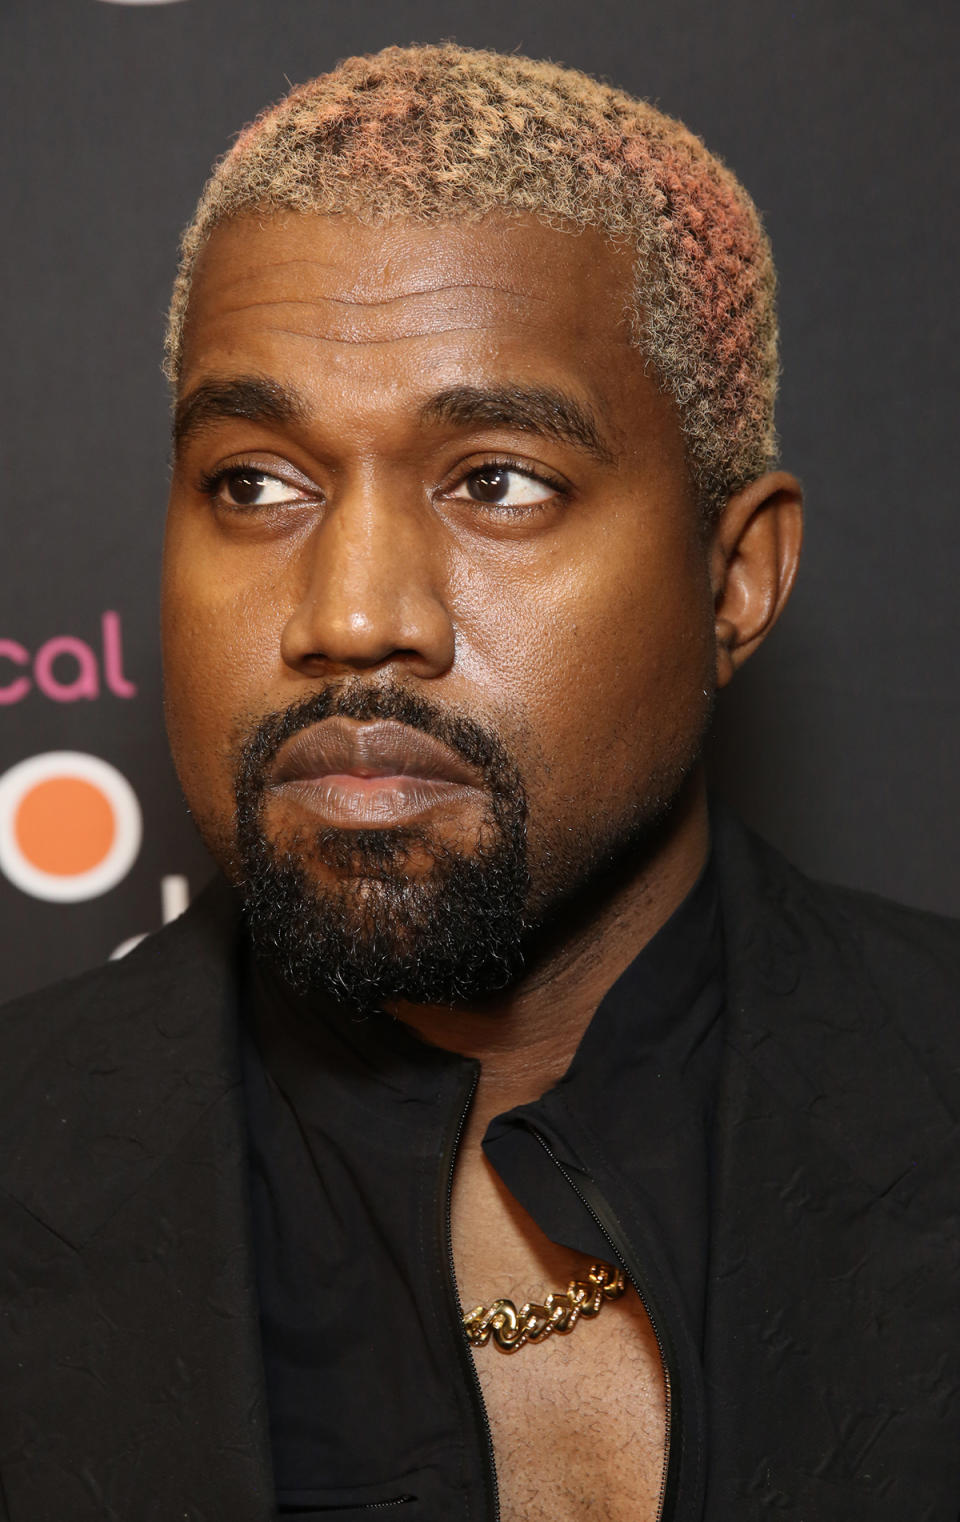 See Kanye West's rainbow hair here.